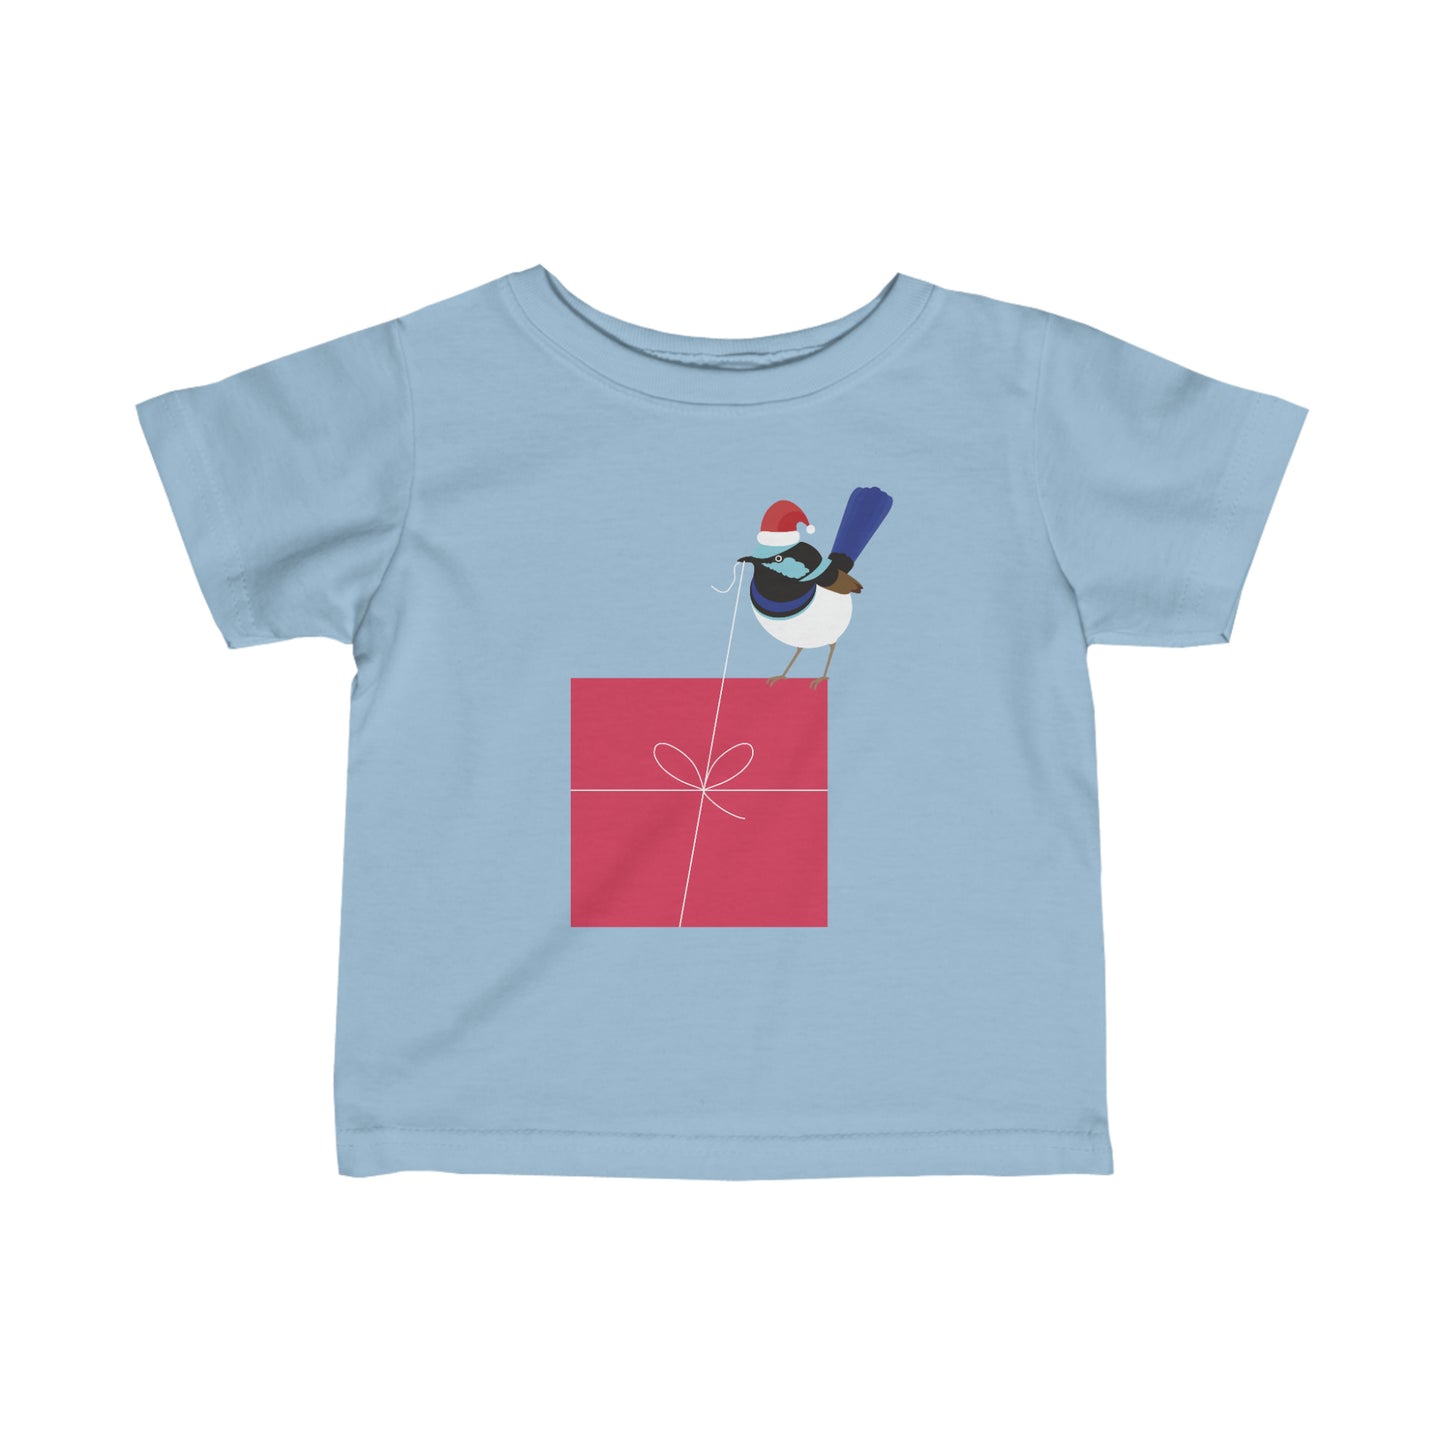 light blue baby t-shirt features a cheeky fairy wren opening a red gift.